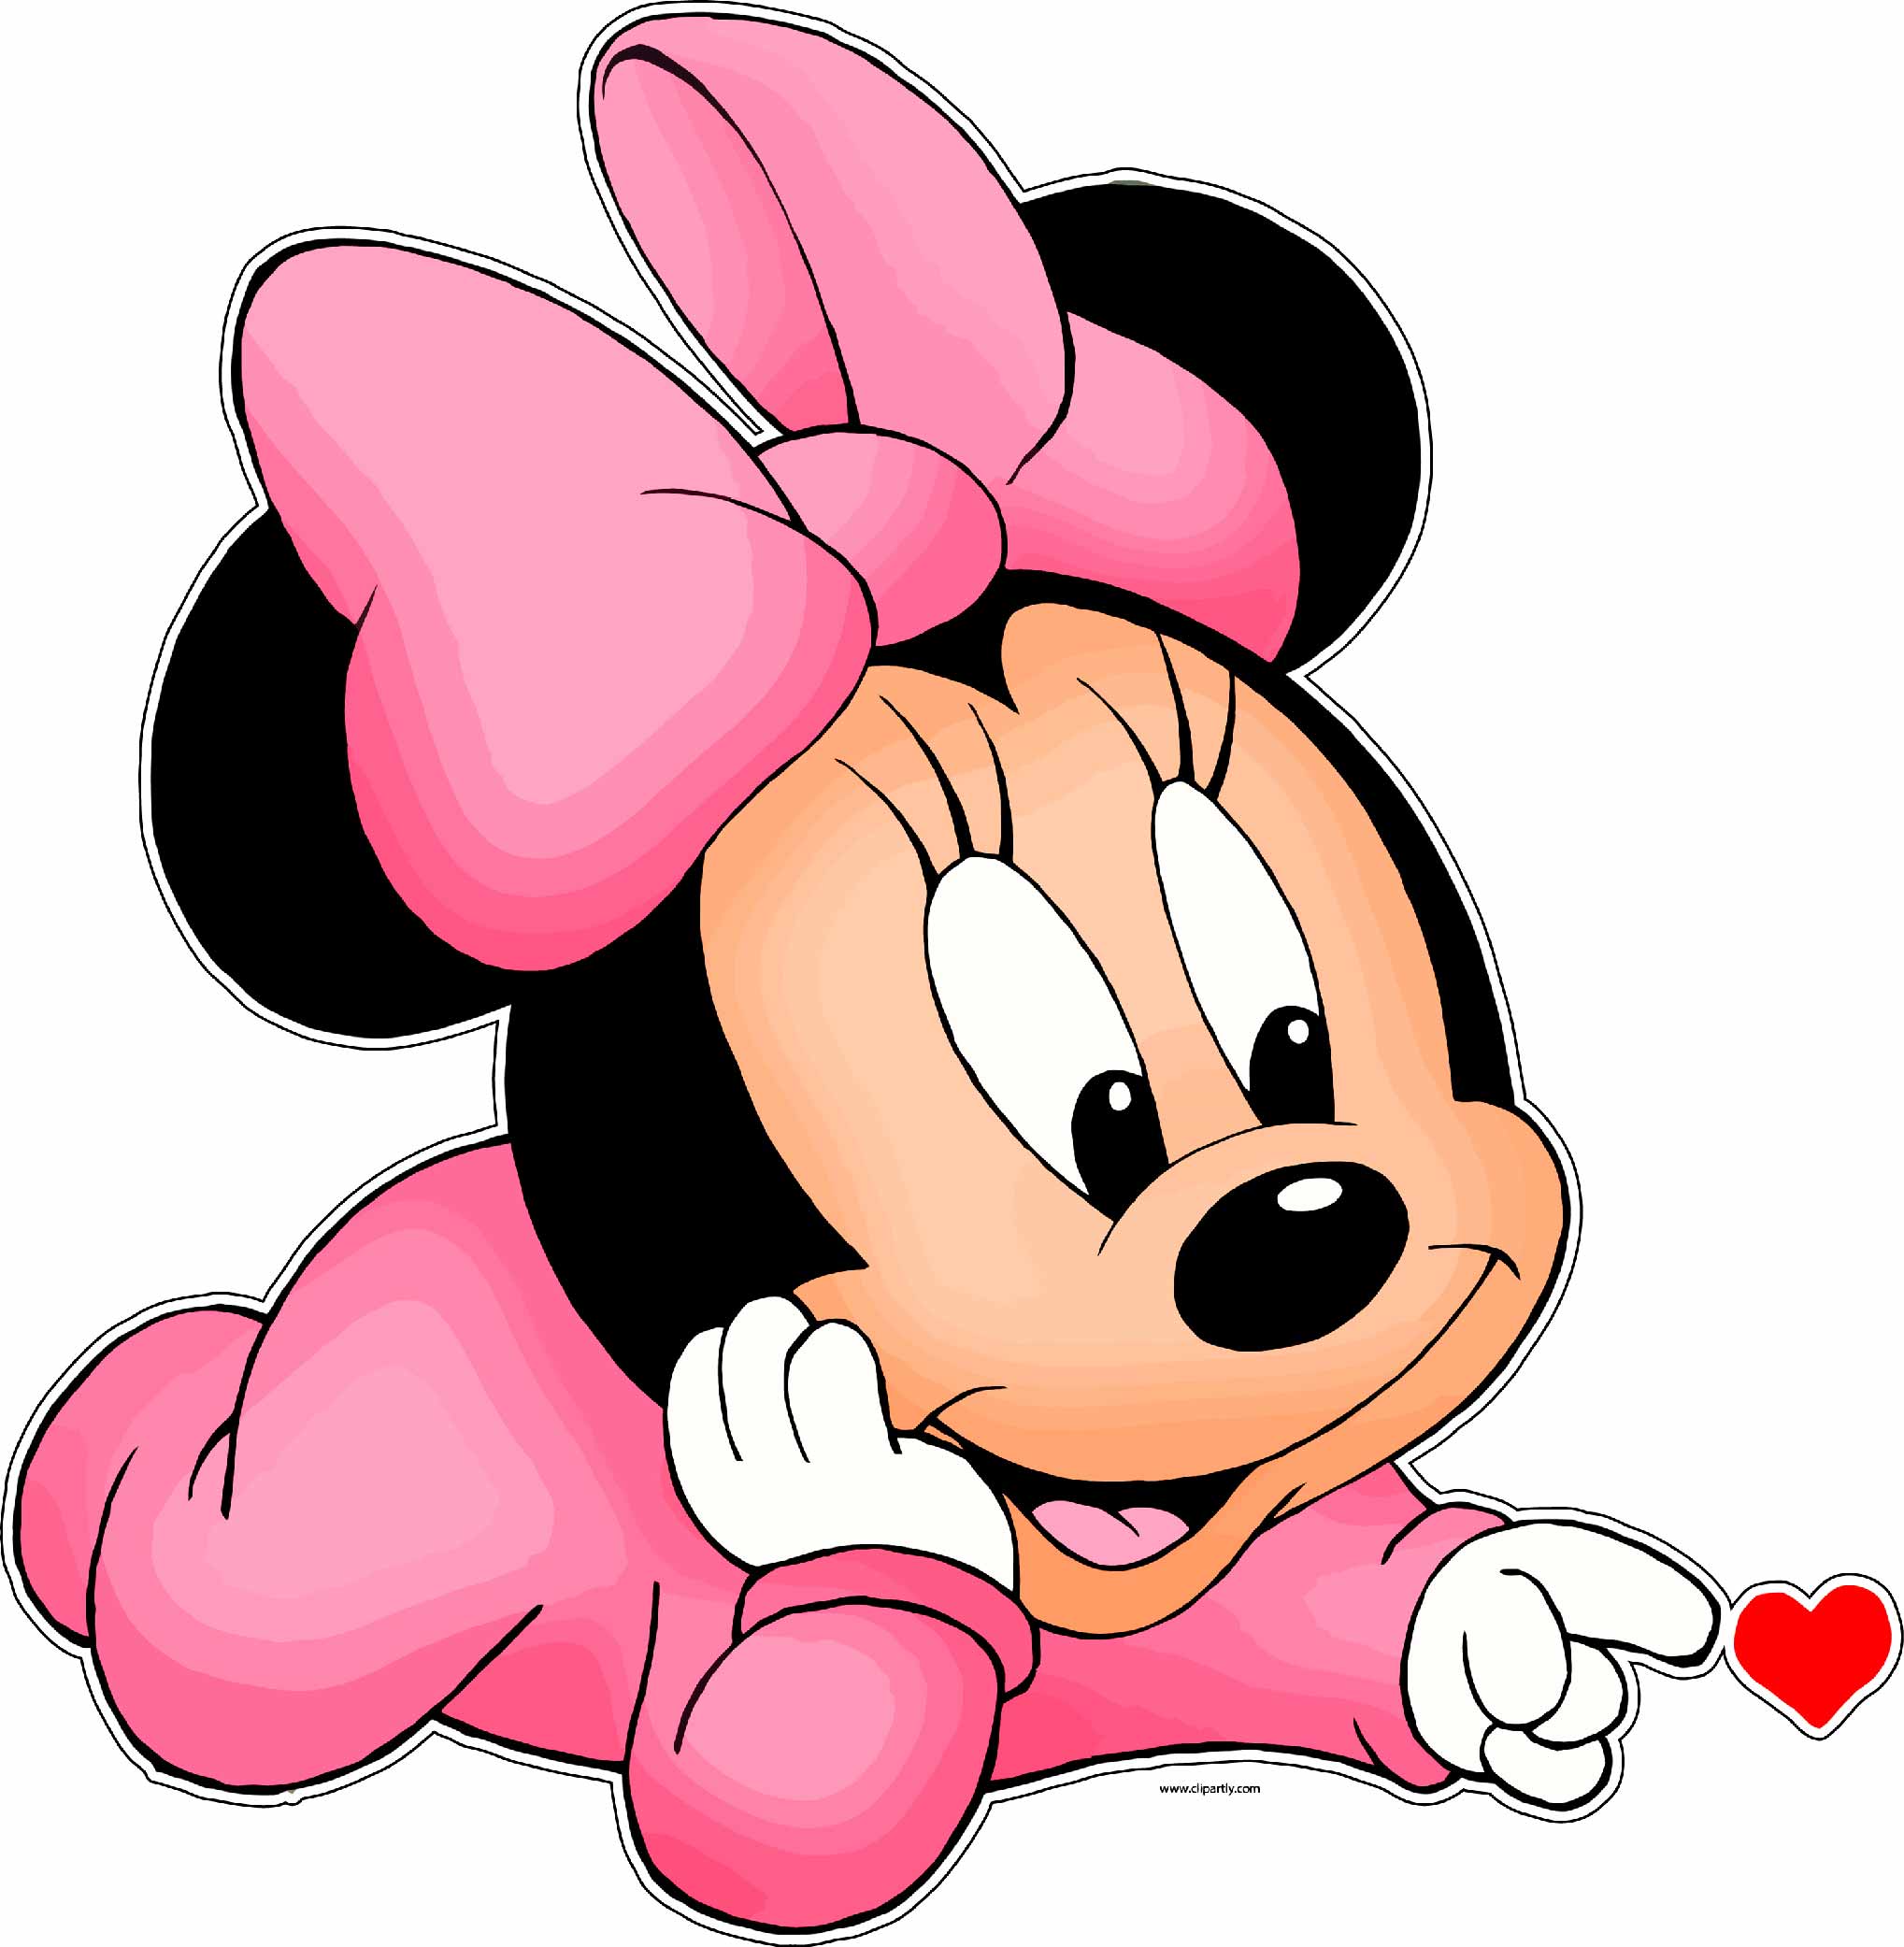 https://anysigns.ca/wp-content/uploads/Disney-Baby-Minnie-Mouse-vinyl-sticker-1.jpg